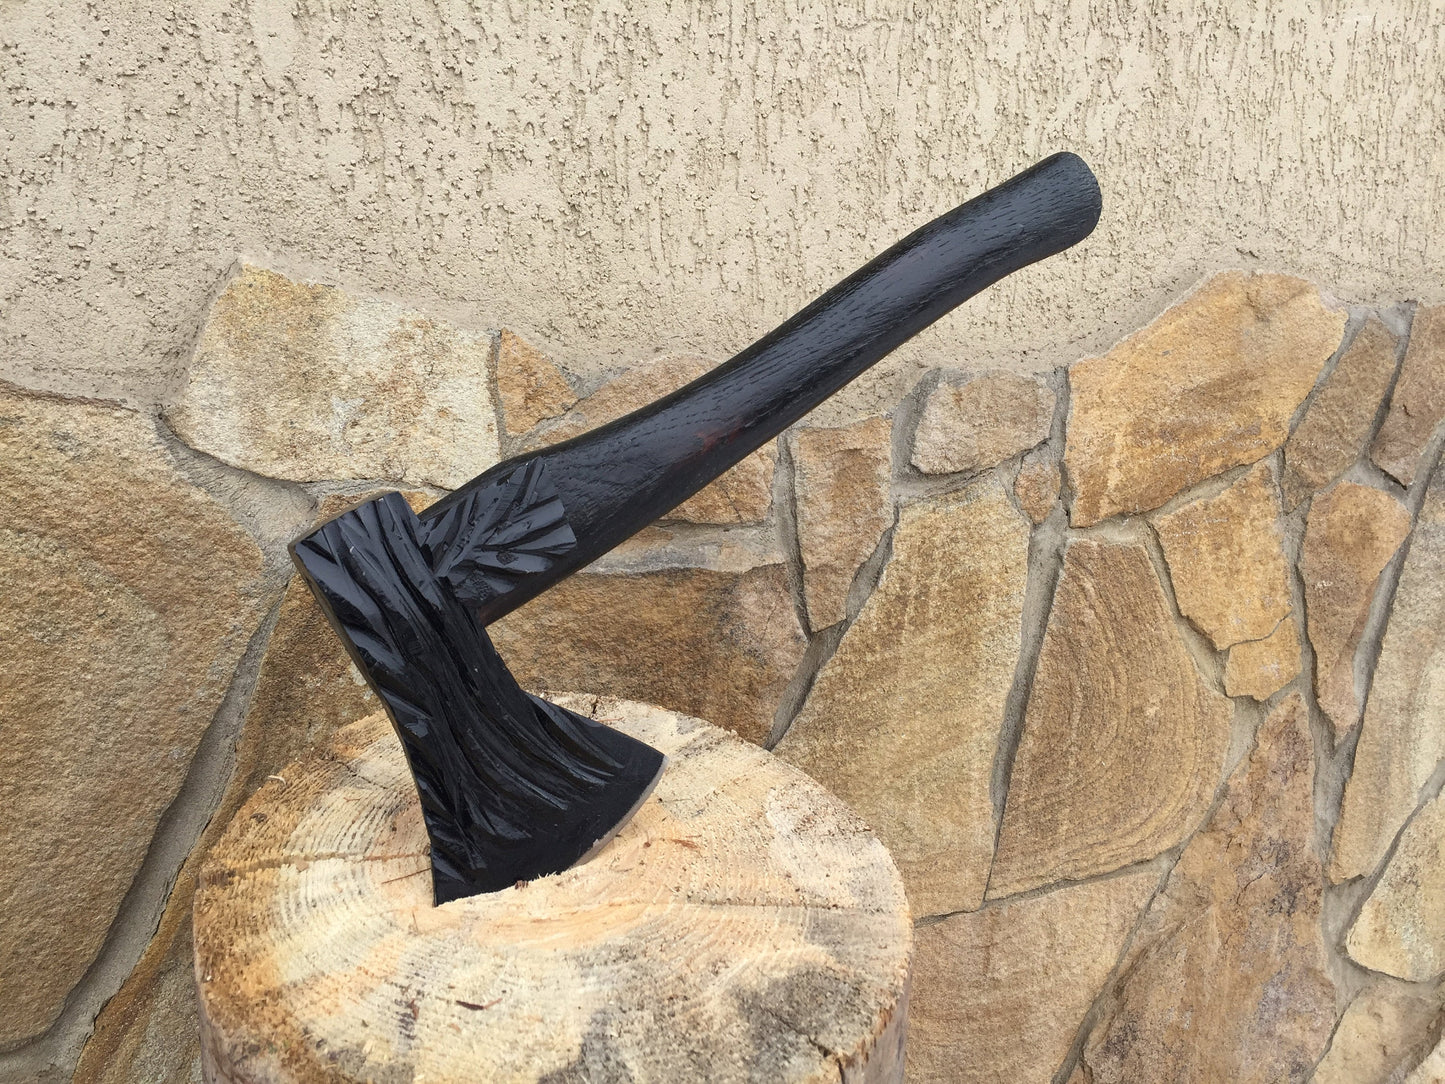 Woodwork axe, viking axe, custom axe, viking hatchet, felling forged axe, axe gift man, mens gift, hunting axe tool,steel axe,survival tools